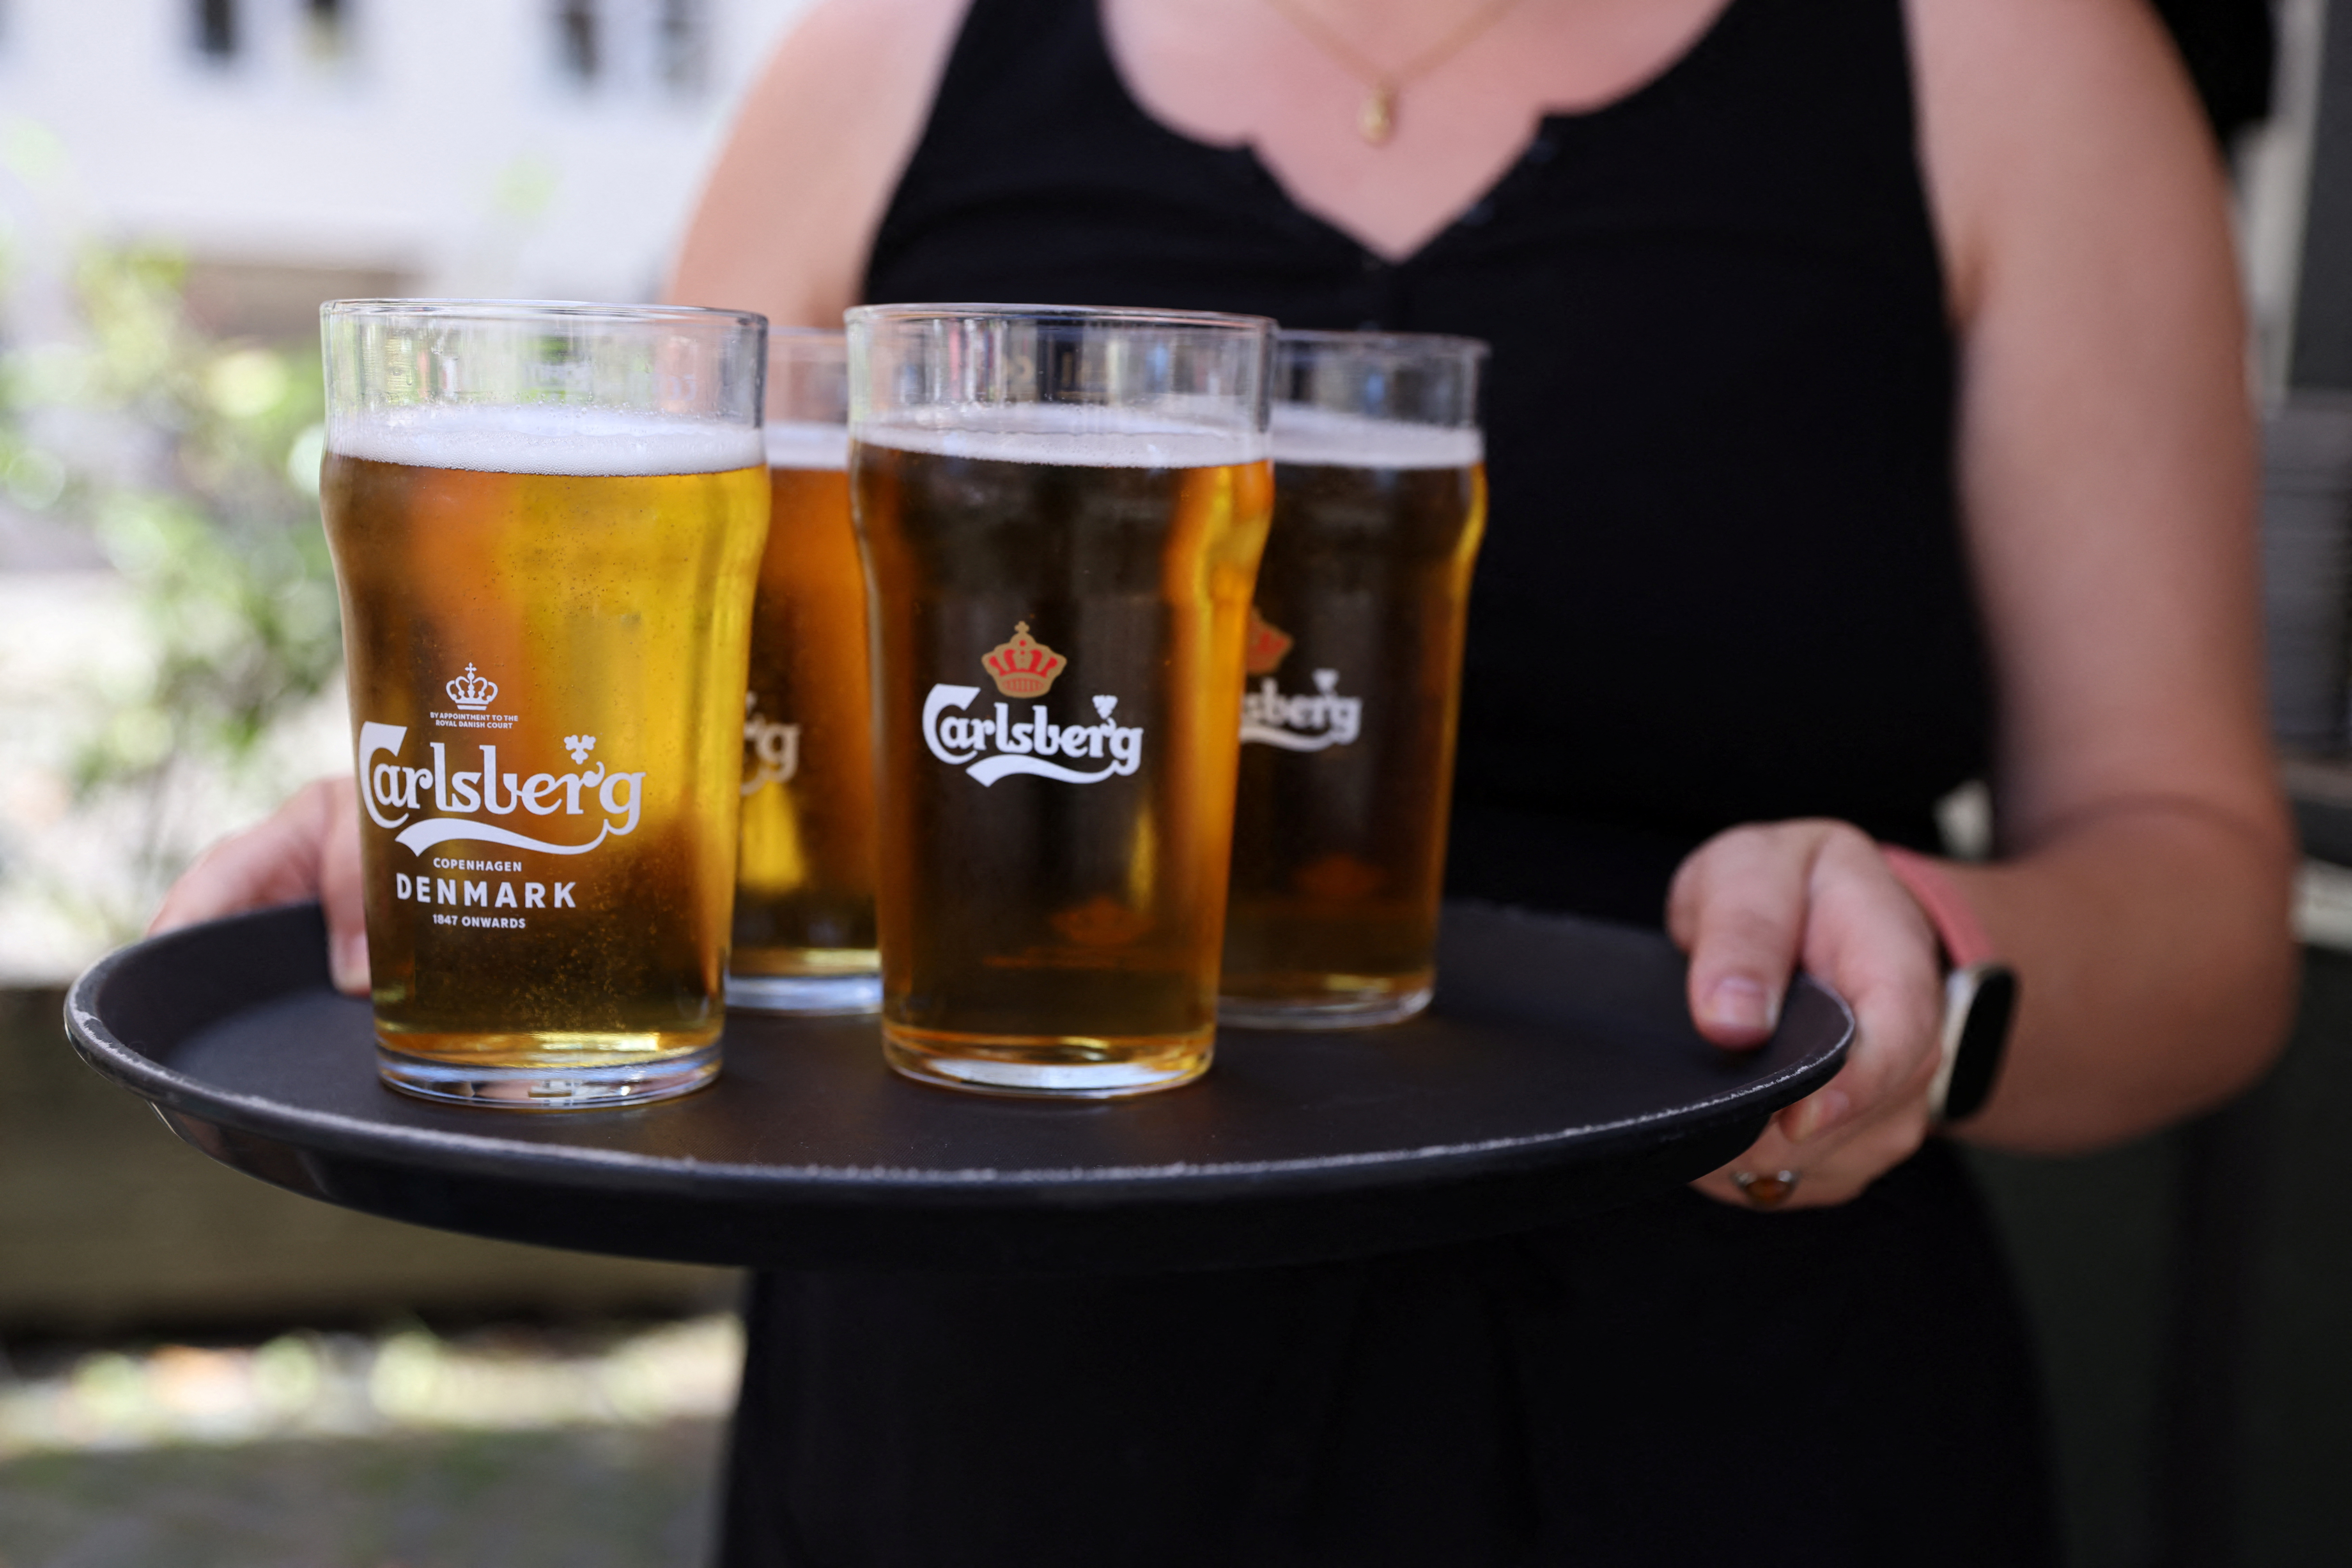 A bar worker carries a tray of Carlsberg beer in Copenhagen